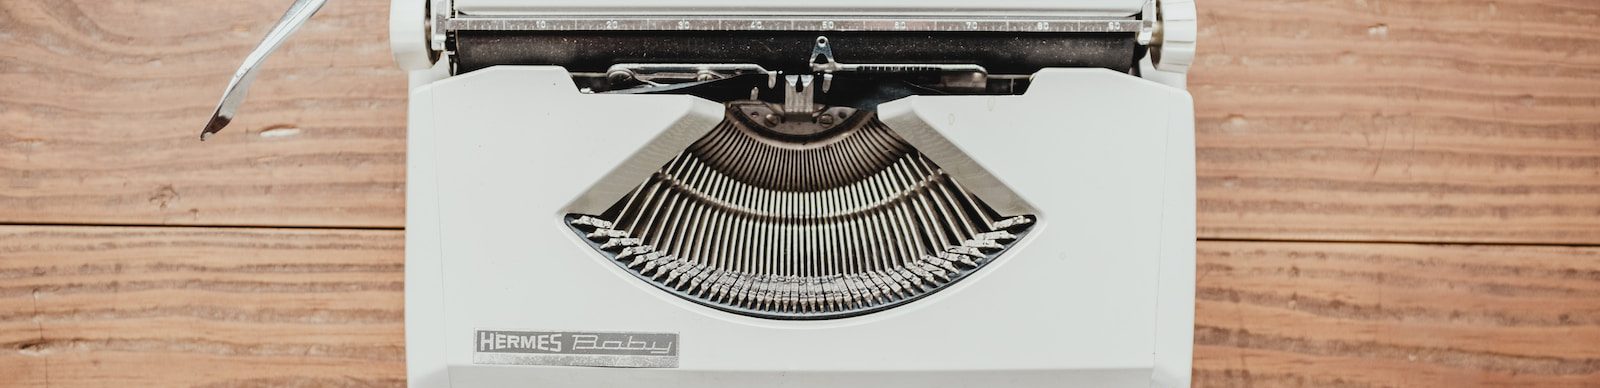 white and black typewriter on table